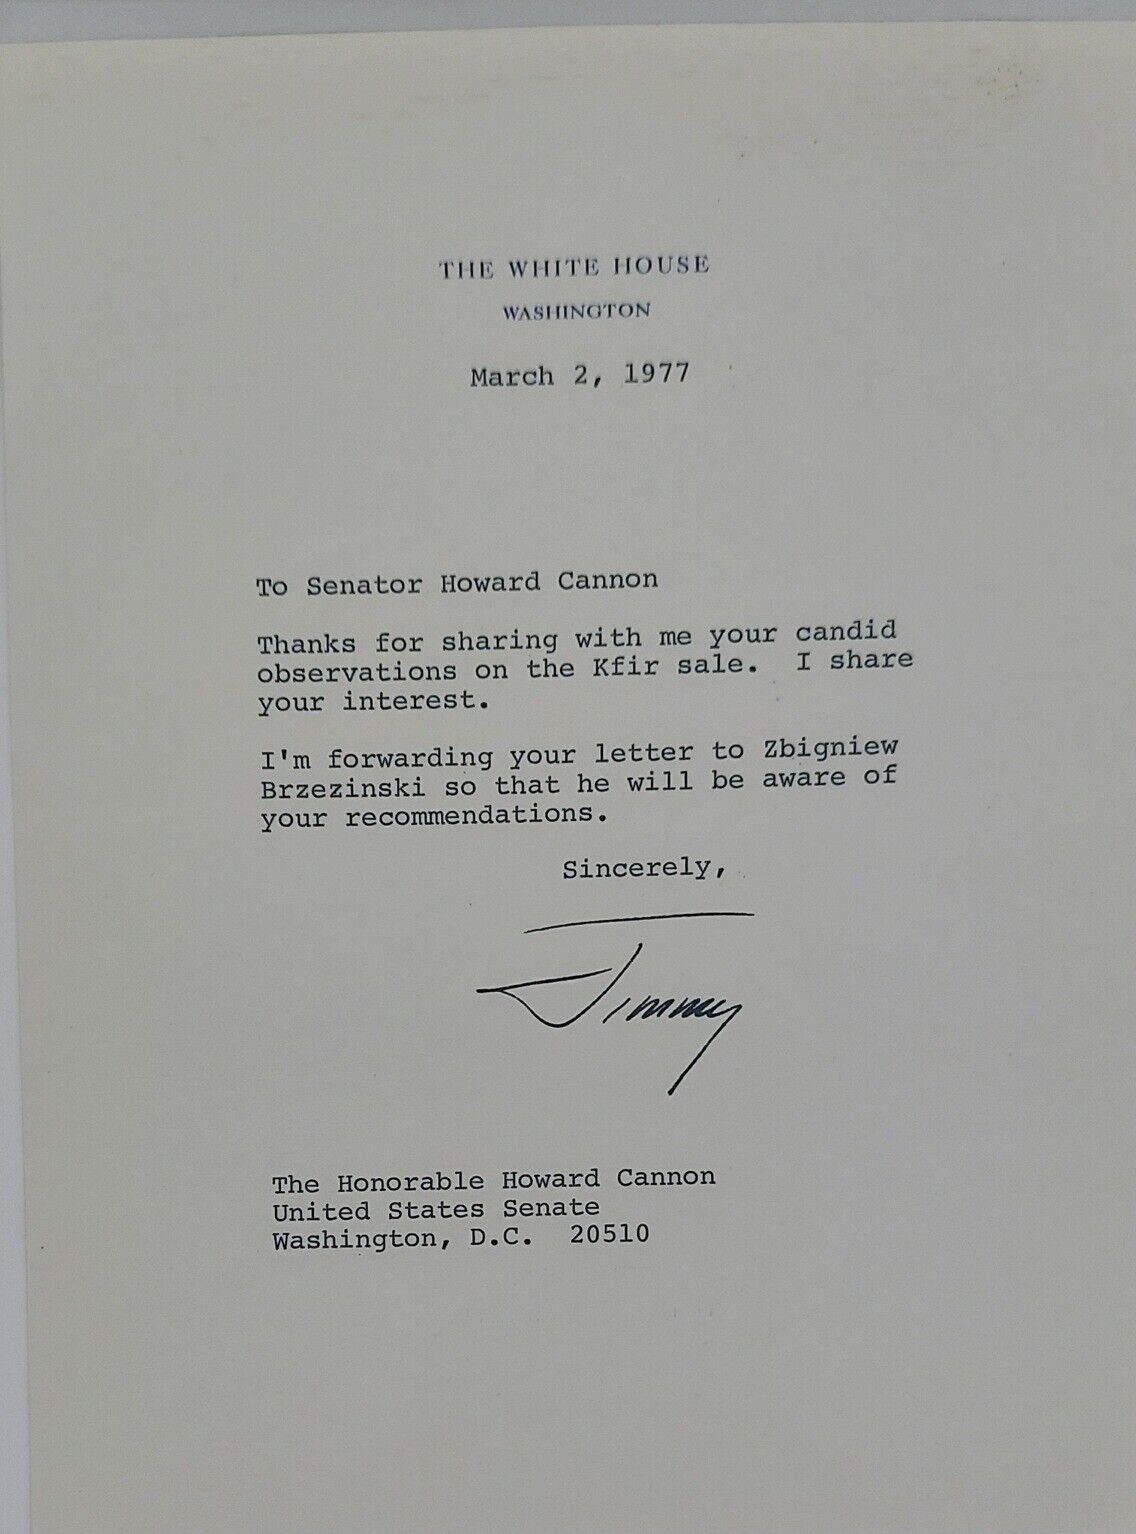 Jimmy Carter Signed White House Letter To Sen Howard Cannon Kfir Sale